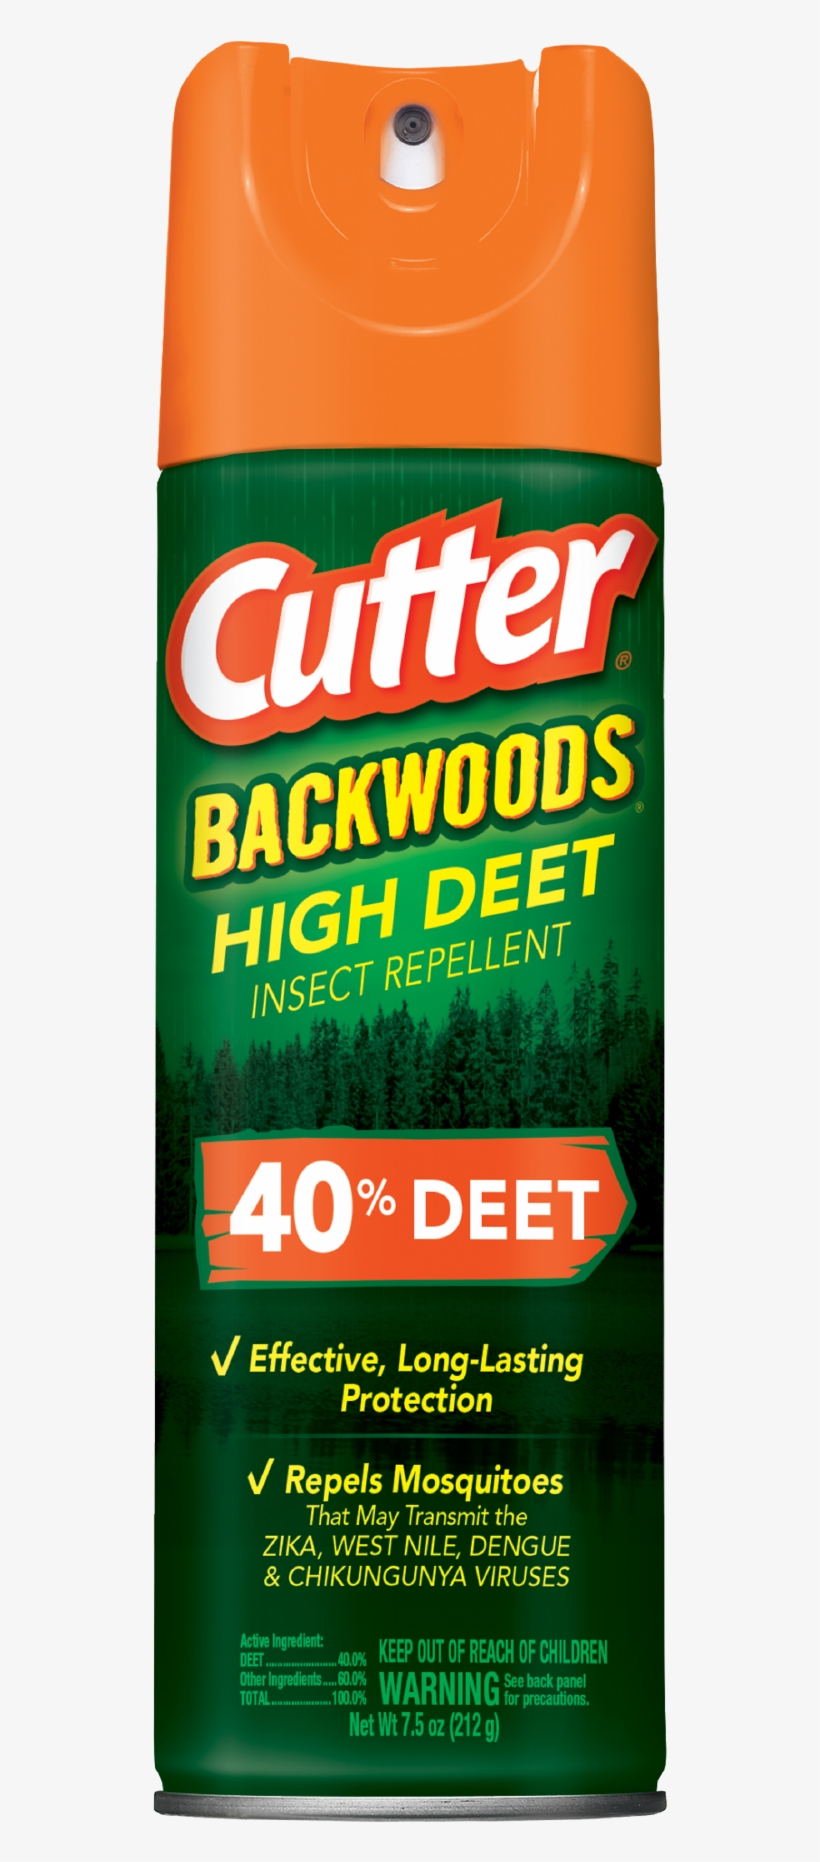 Cutter Cut Backwoods 40% High Deet - Cutter Backwoods Insect Repellent, transparent png #1727470